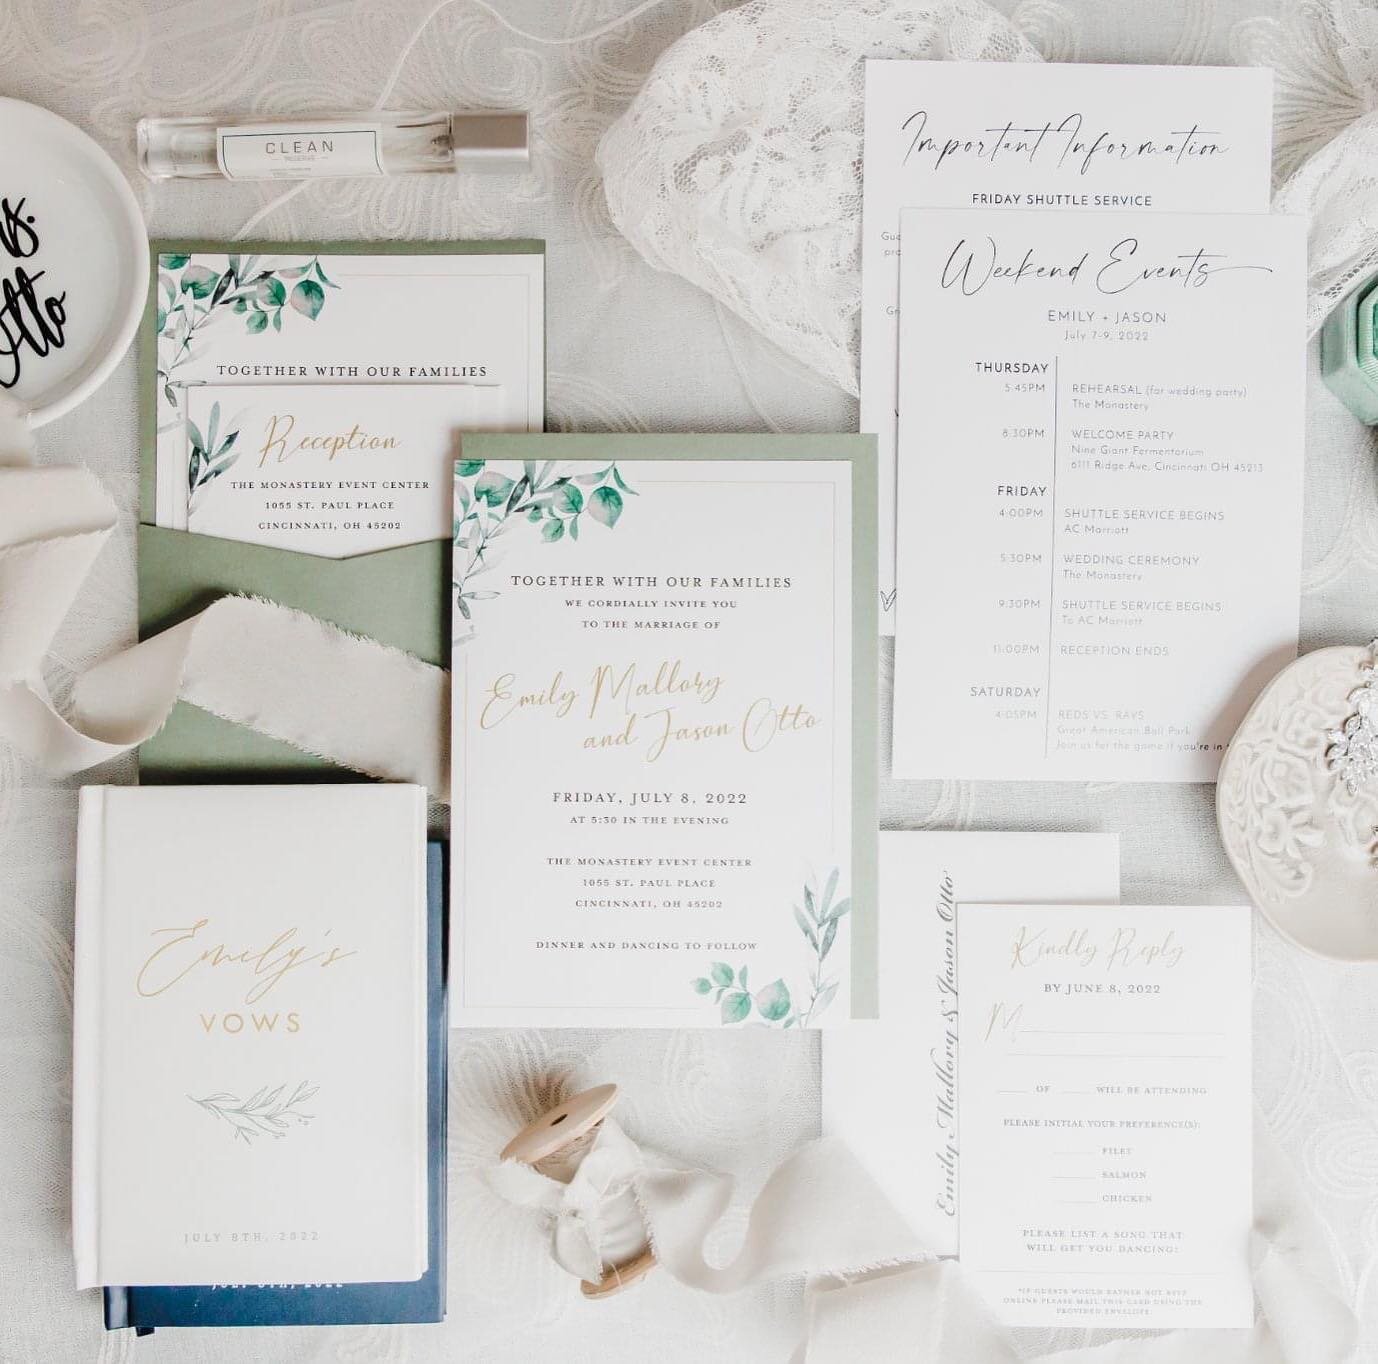 Wedding invitations 🤍
&bull;
&bull;

#wedding #bride #design #cincinnati #ohio #cincinnatiwedding #graphicdesign #invites #invitations #weddinginspiration #weddinginvitations